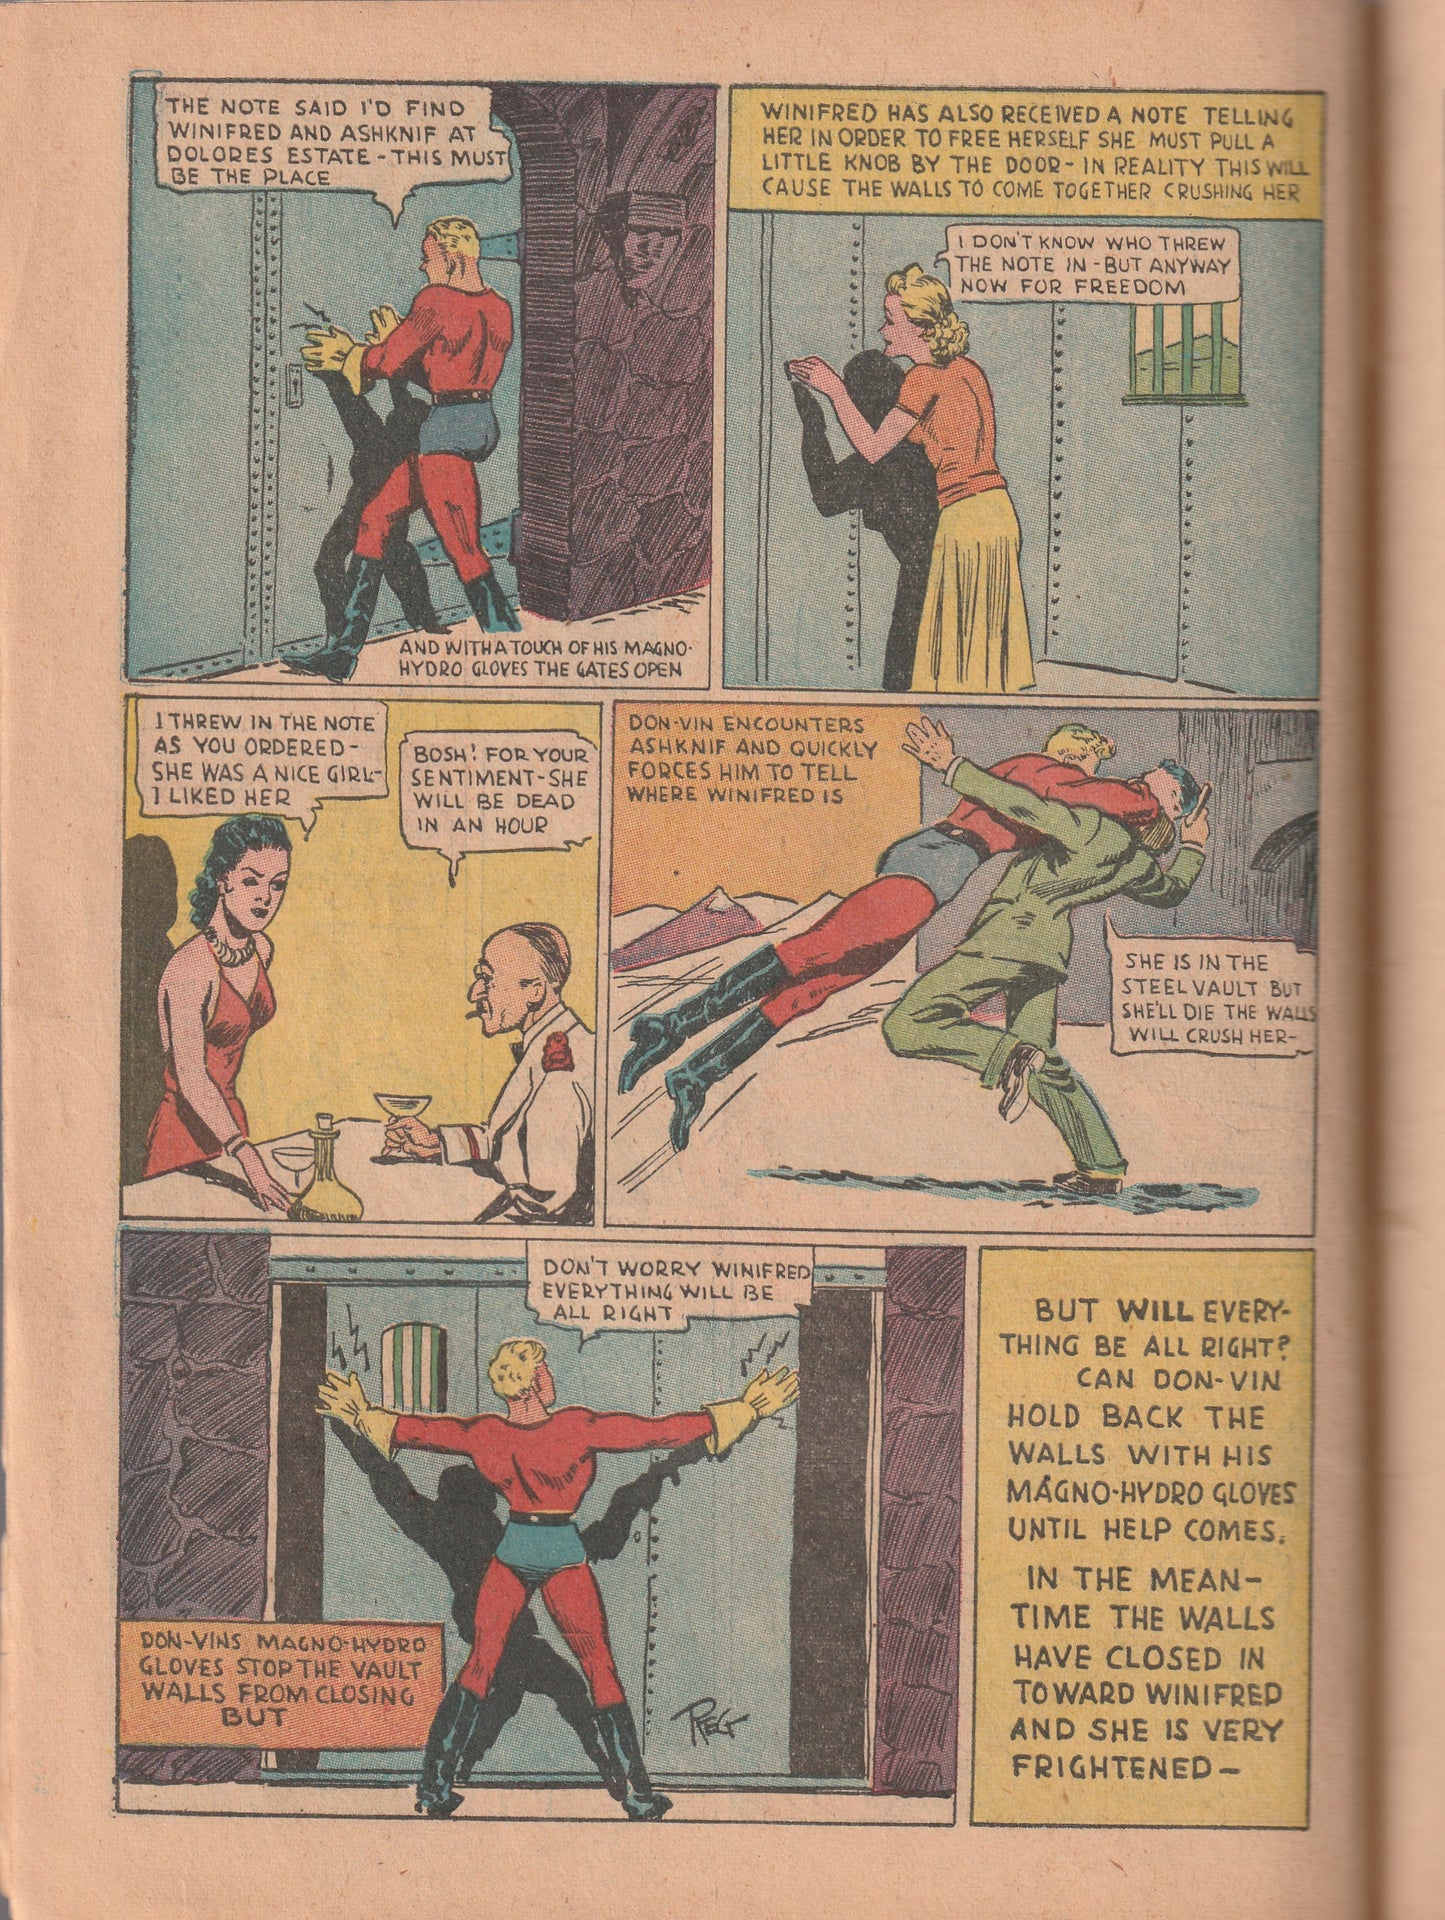 Hyper Mystery Comics Vol 1 #1 (1940) - Hyper, the Phenomenal begins